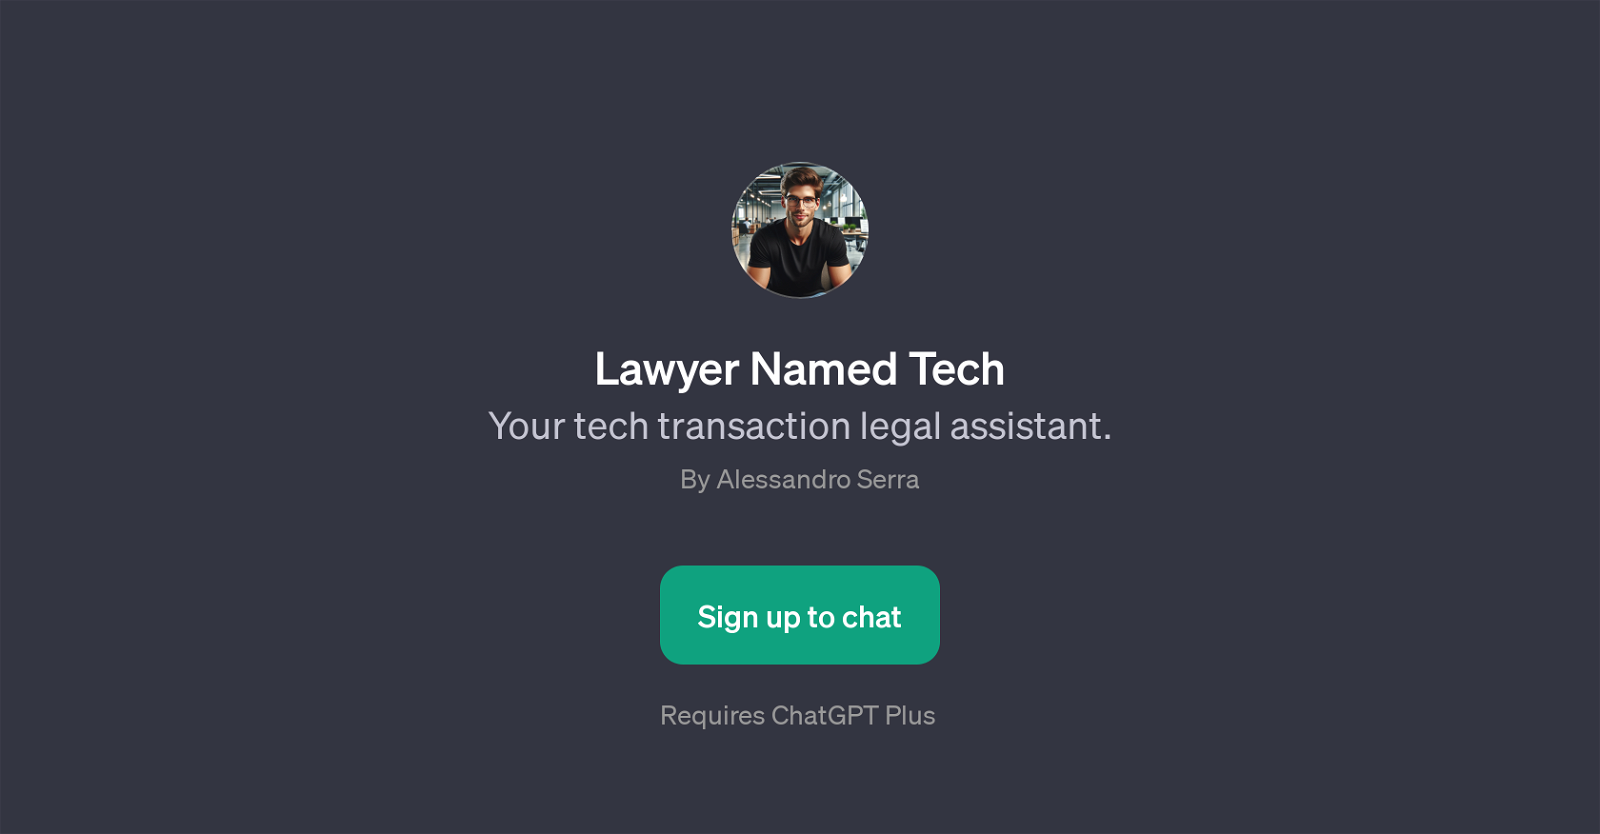 Lawyer Named Tech website